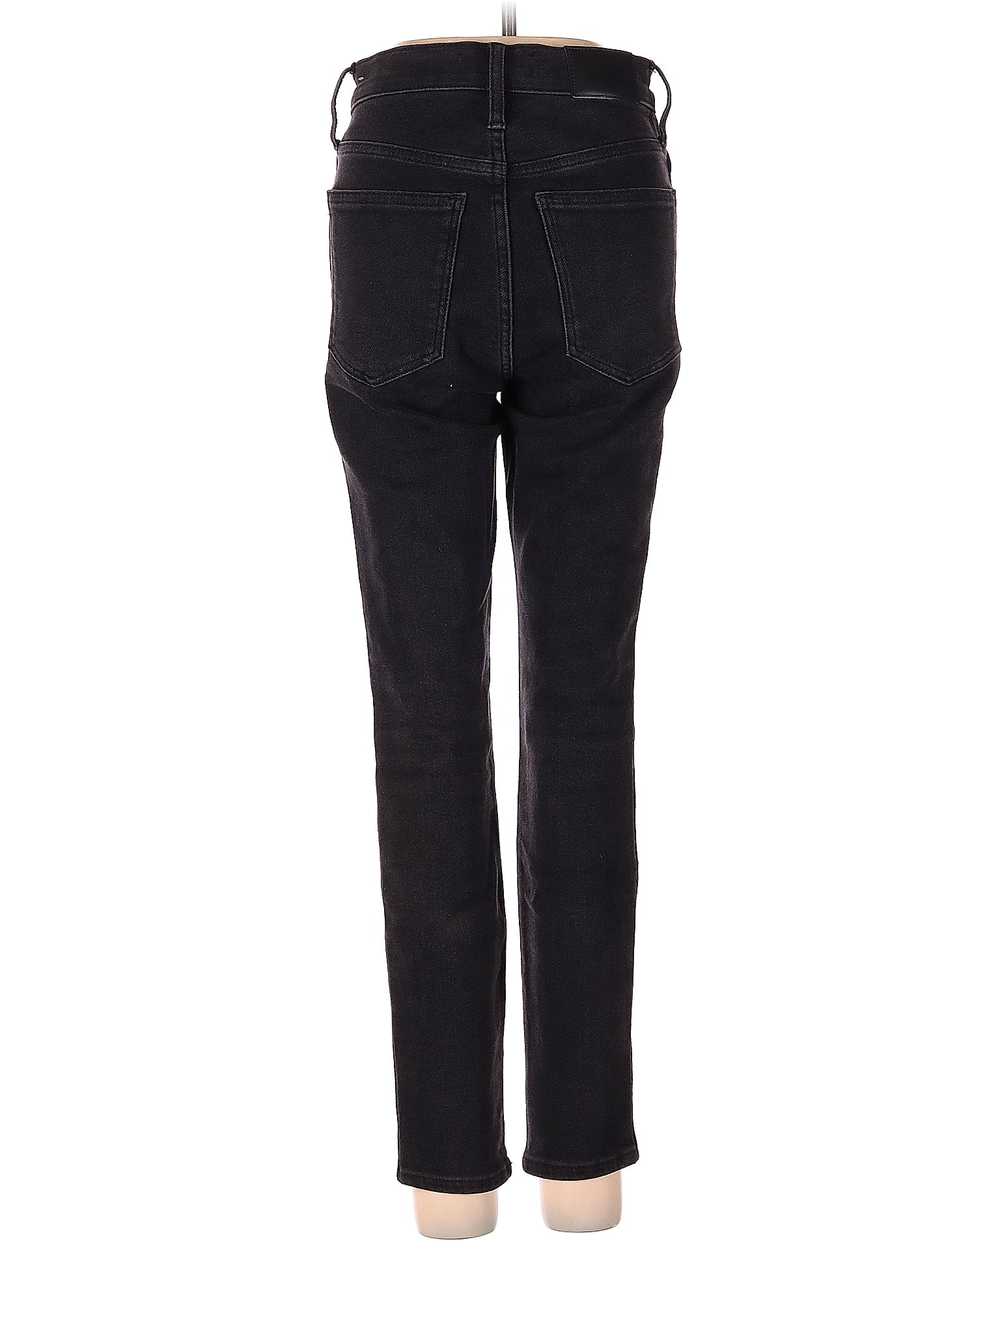 Madewell Women Black Jeans 25W - image 2